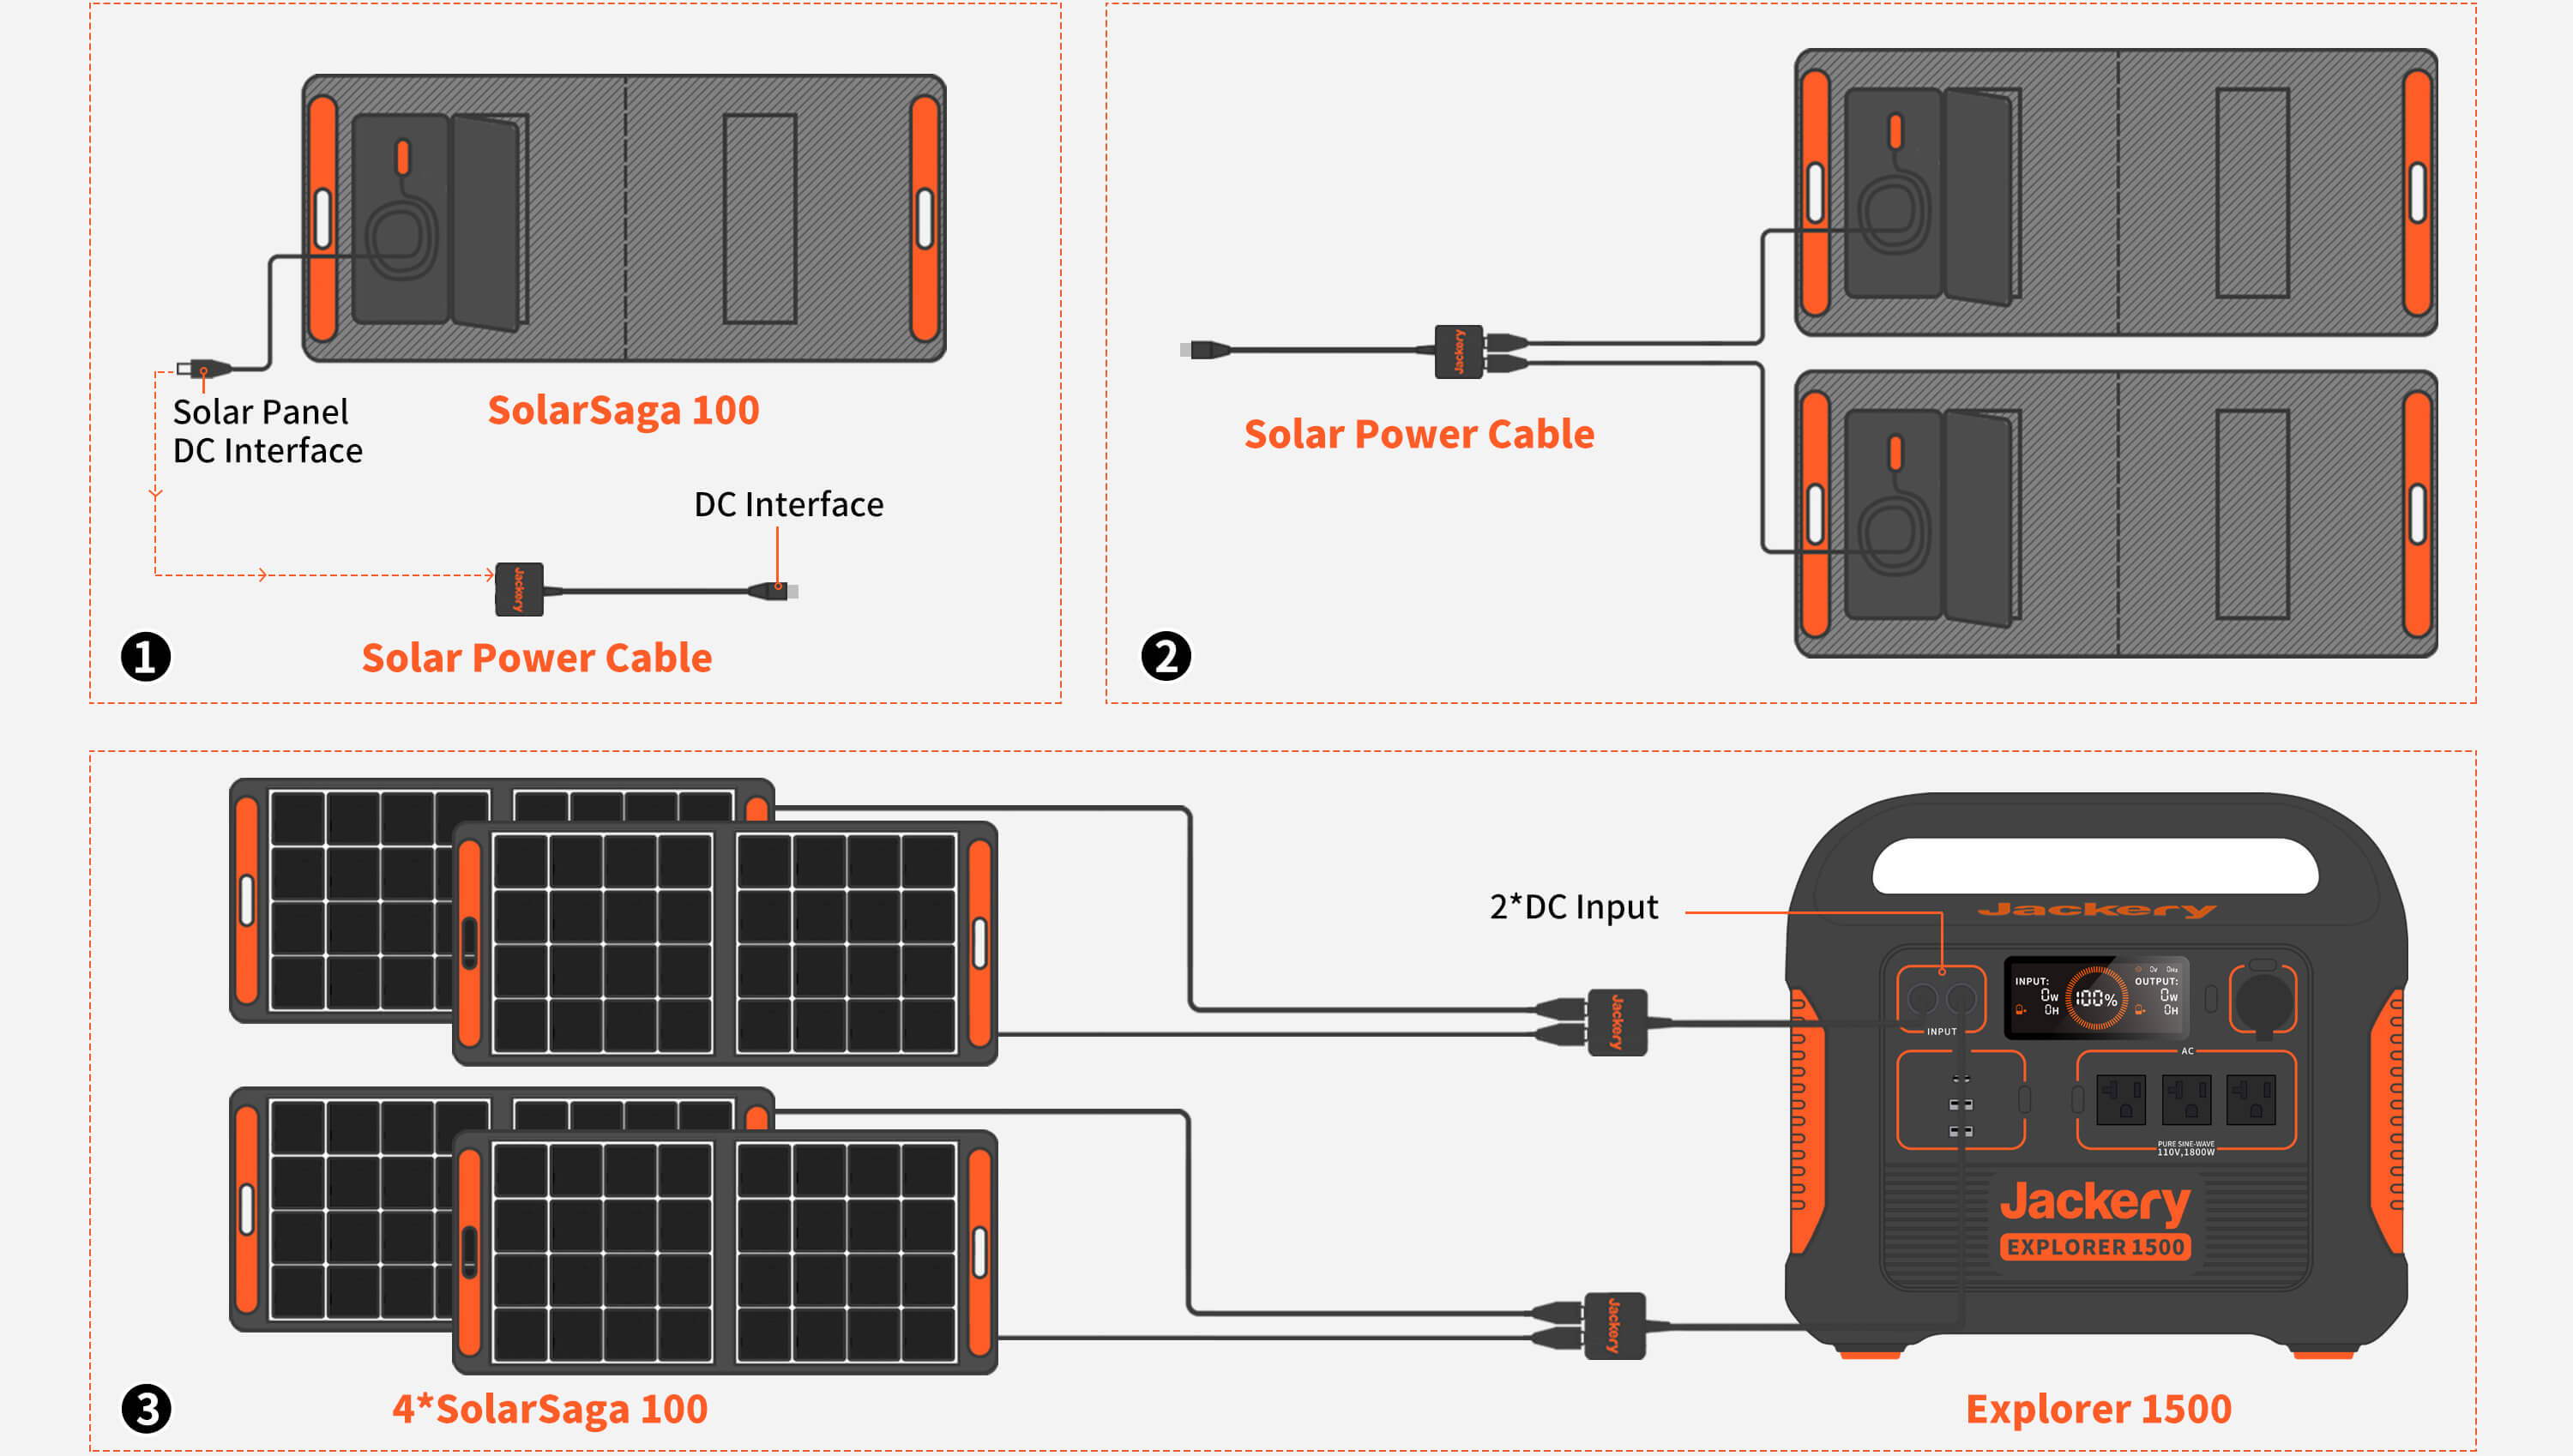 Black and orange audio mixer | Solar Panel DC Interface, SolarSaga 100, Solar Power Cable, DC Interface, Jackory, Solar Power Cable, 2 * 2 :, Ow %, OH, INPUT, AC, UUUUUUUUUUUU, Jackery, EXPLORER 1500, Jackery, 3, 4 * SolarSaga 100, Explorer 1500